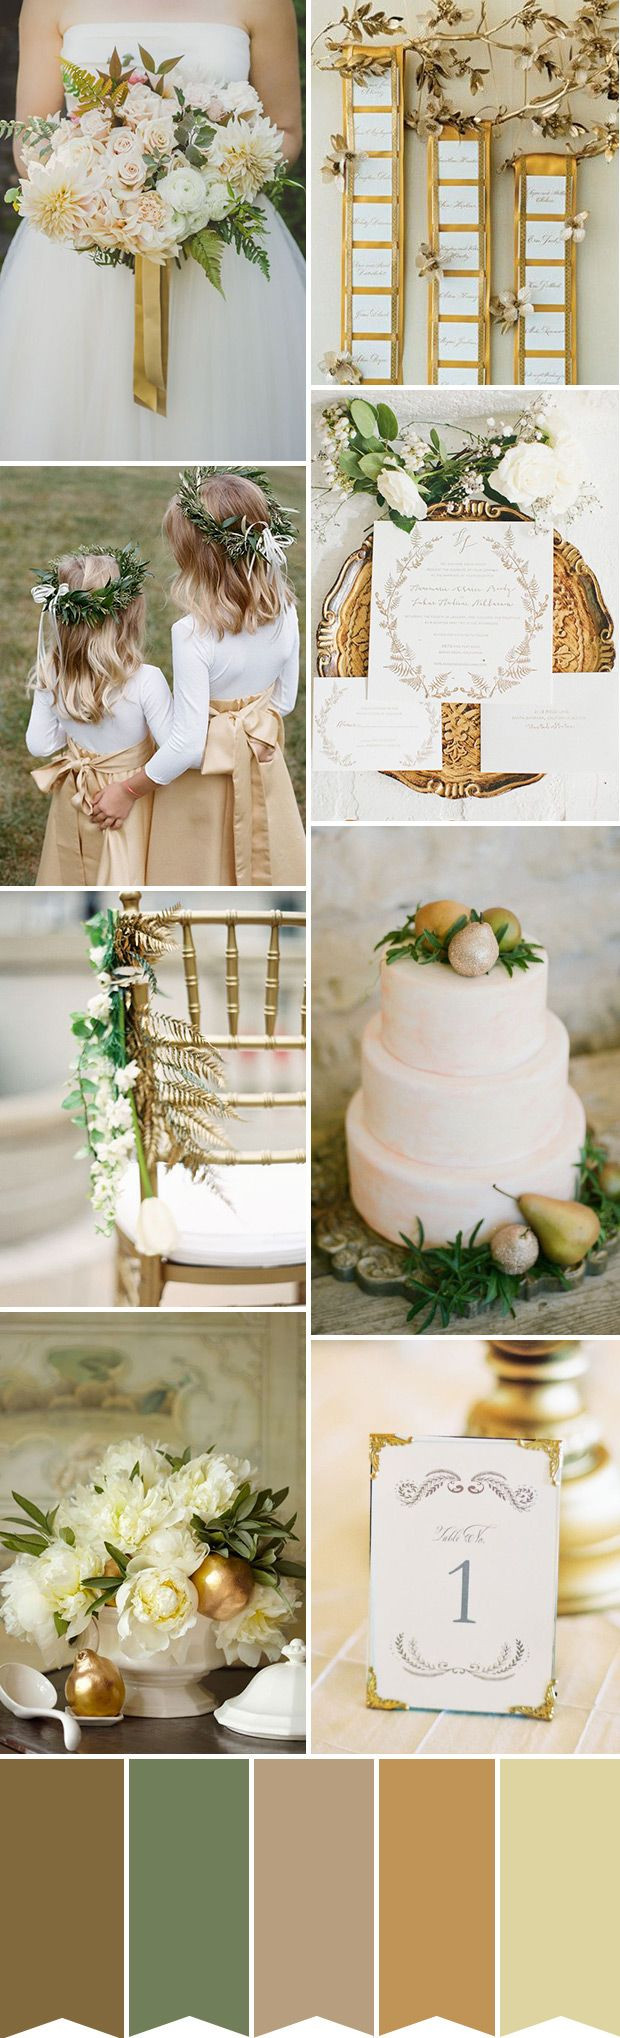 Rustic Wedding Color Schemes
 Popular Rustic Wedding Themes 2015 – BLOG